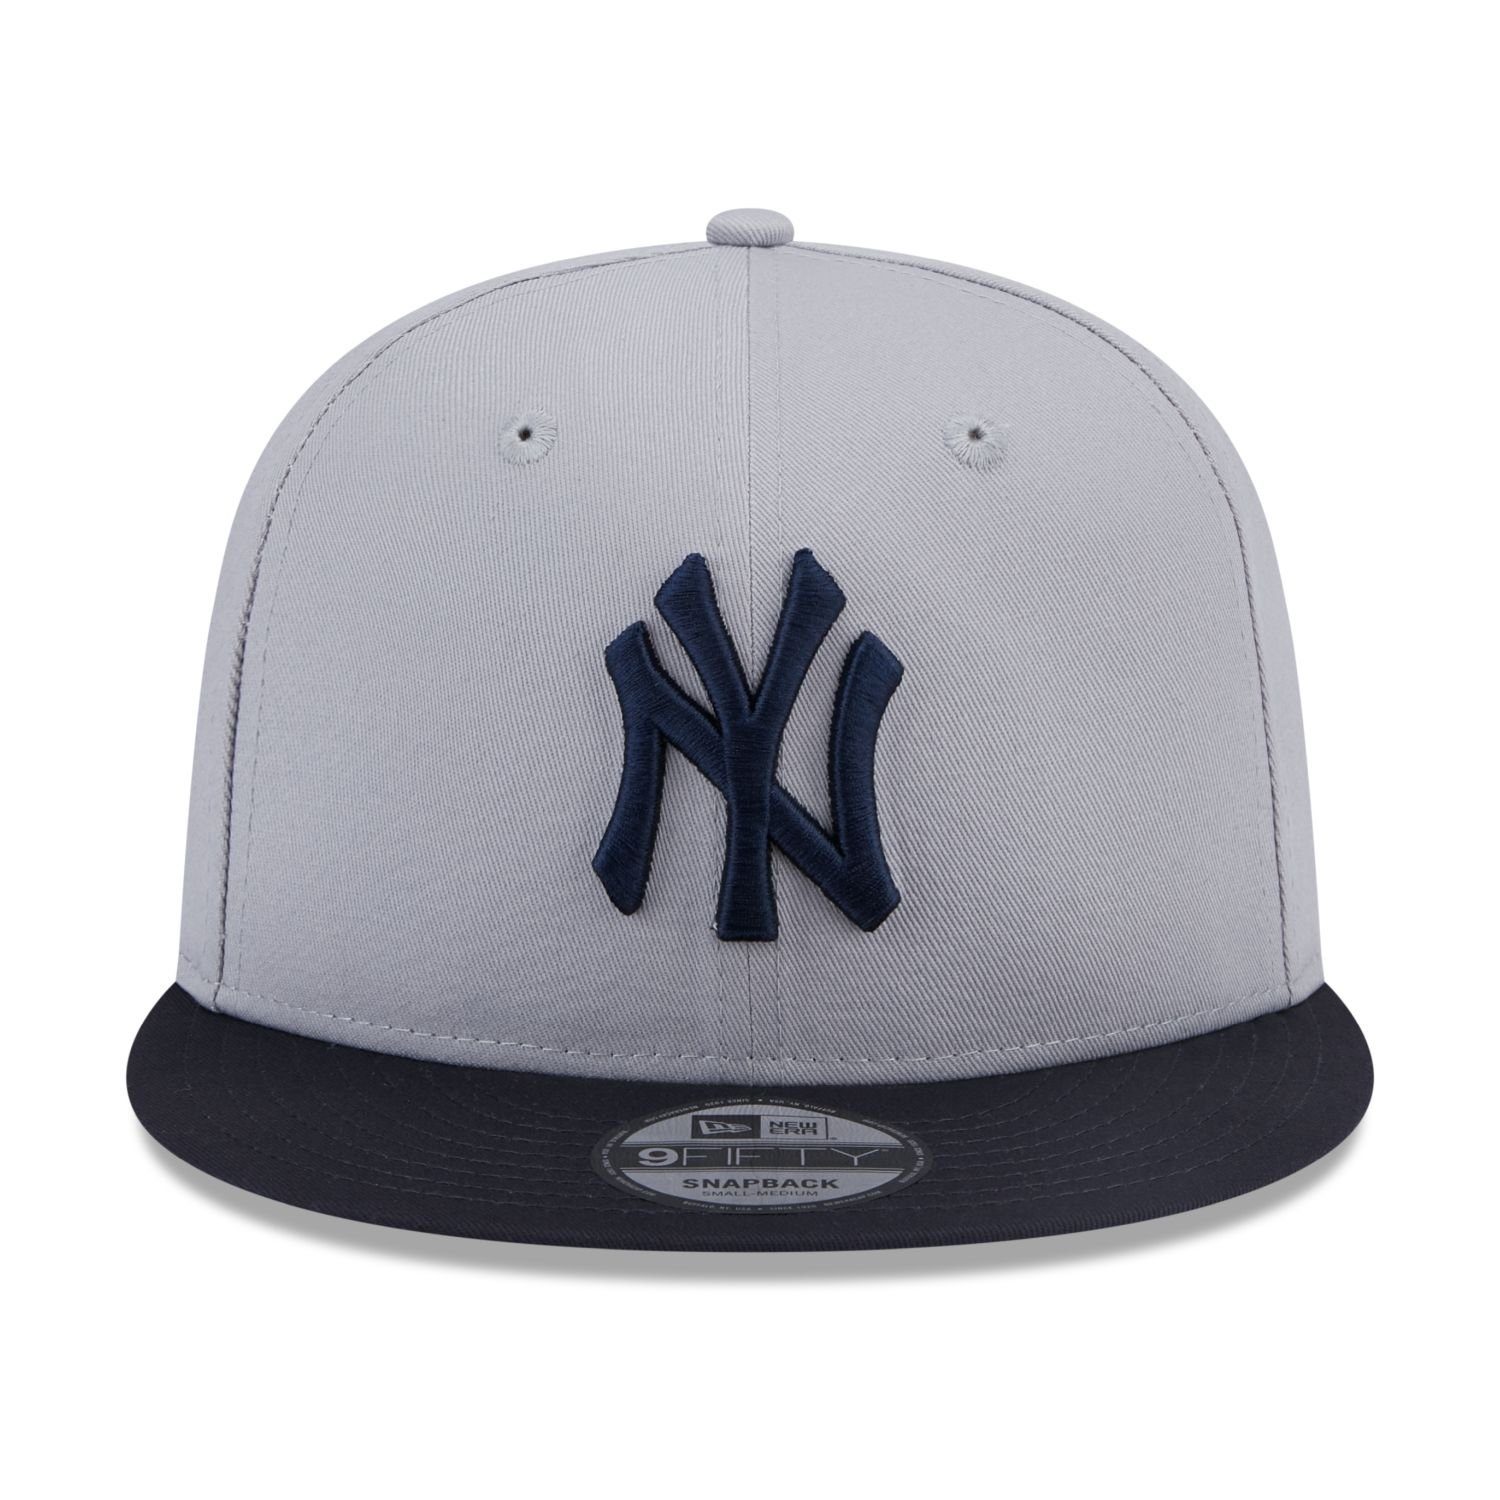 SIDEPATCH New Cap New Yankees Era Snapback 9Fifty York